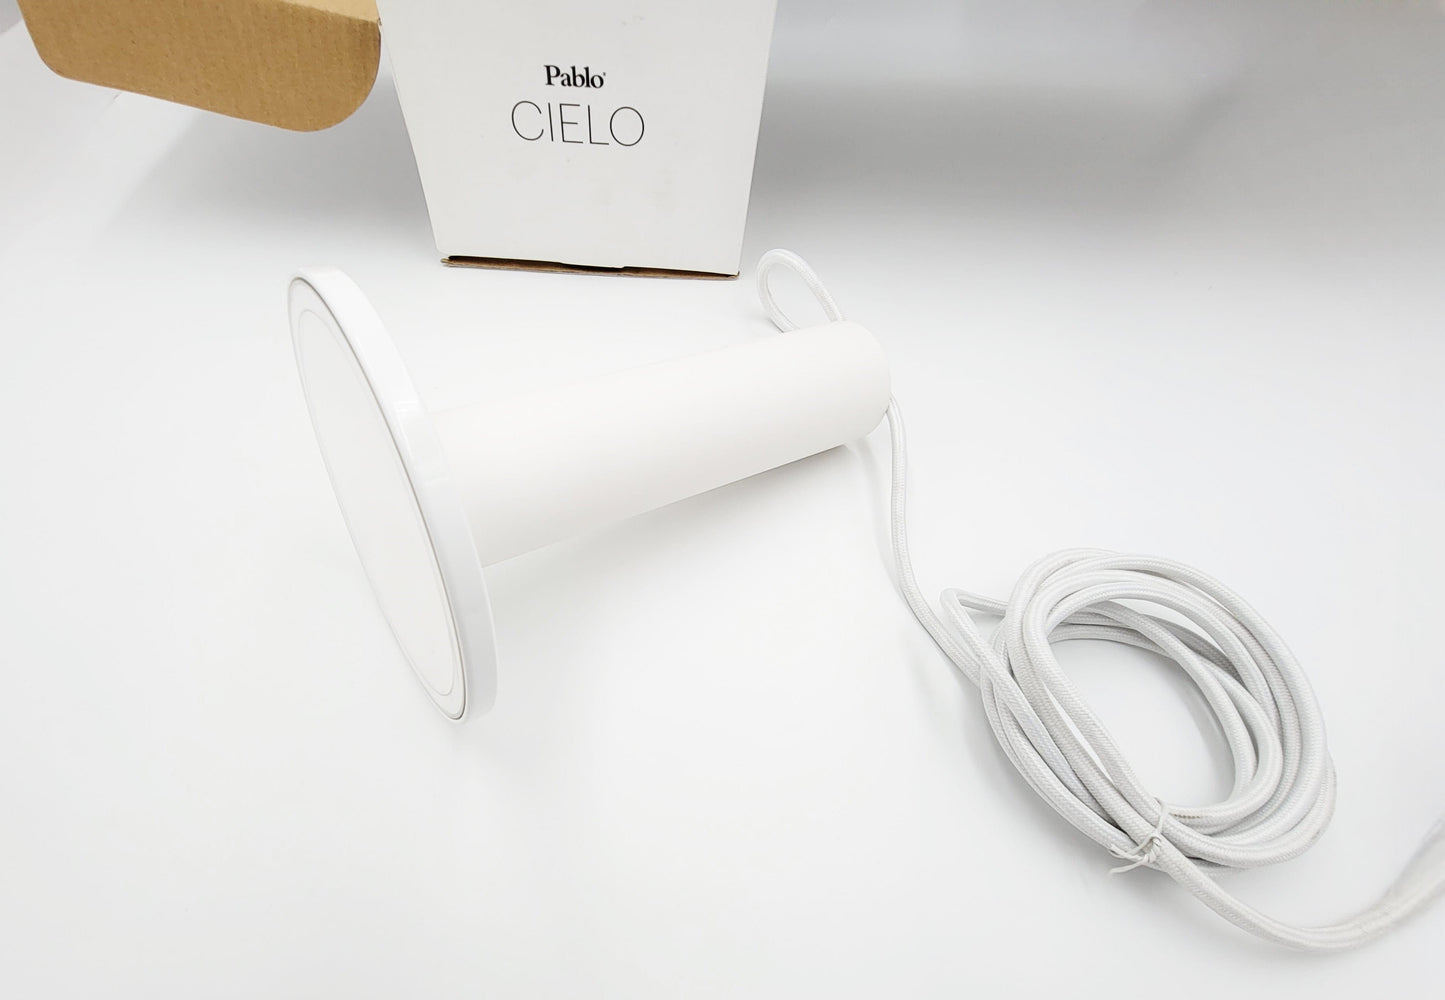 Pablo Cielo Lamps Pablo Designs "Cielo" Modernist Minimalist LED Pendant Light in All White NIB